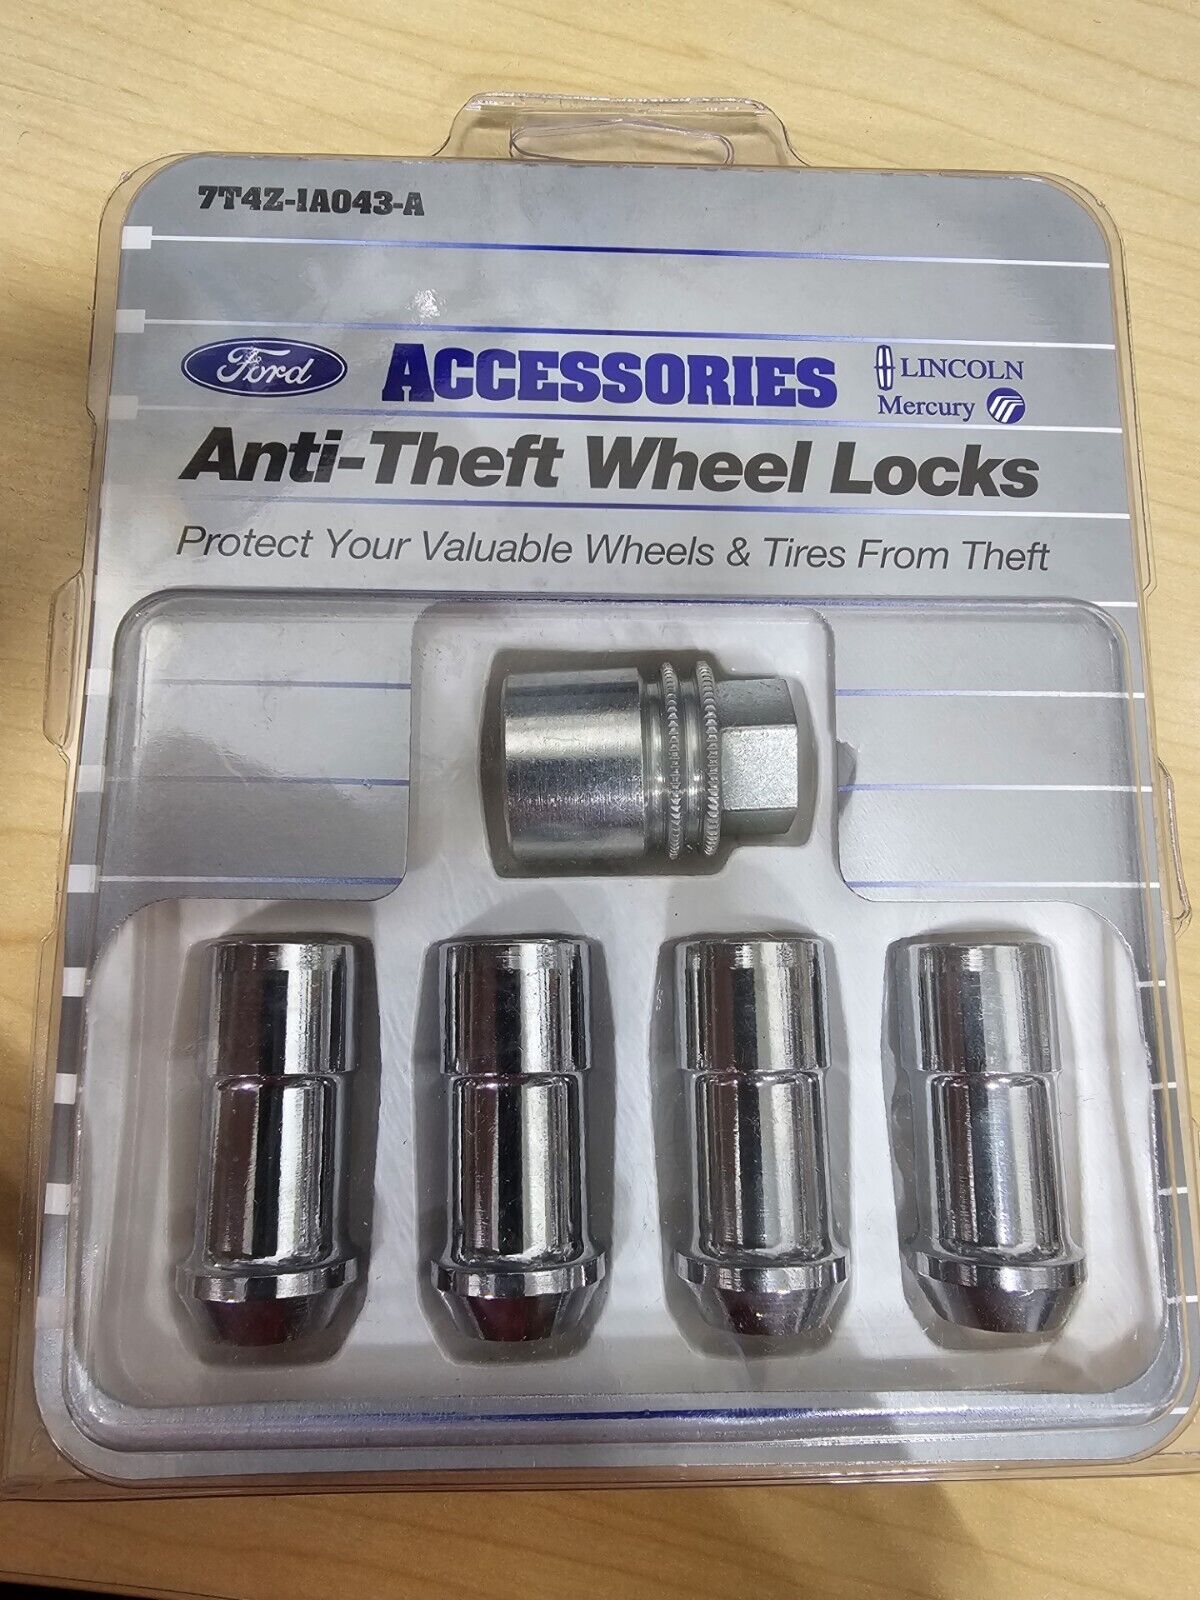 7T4Z-1A043-A Ford Accessory Anti-Theft Wheel Locks NEW